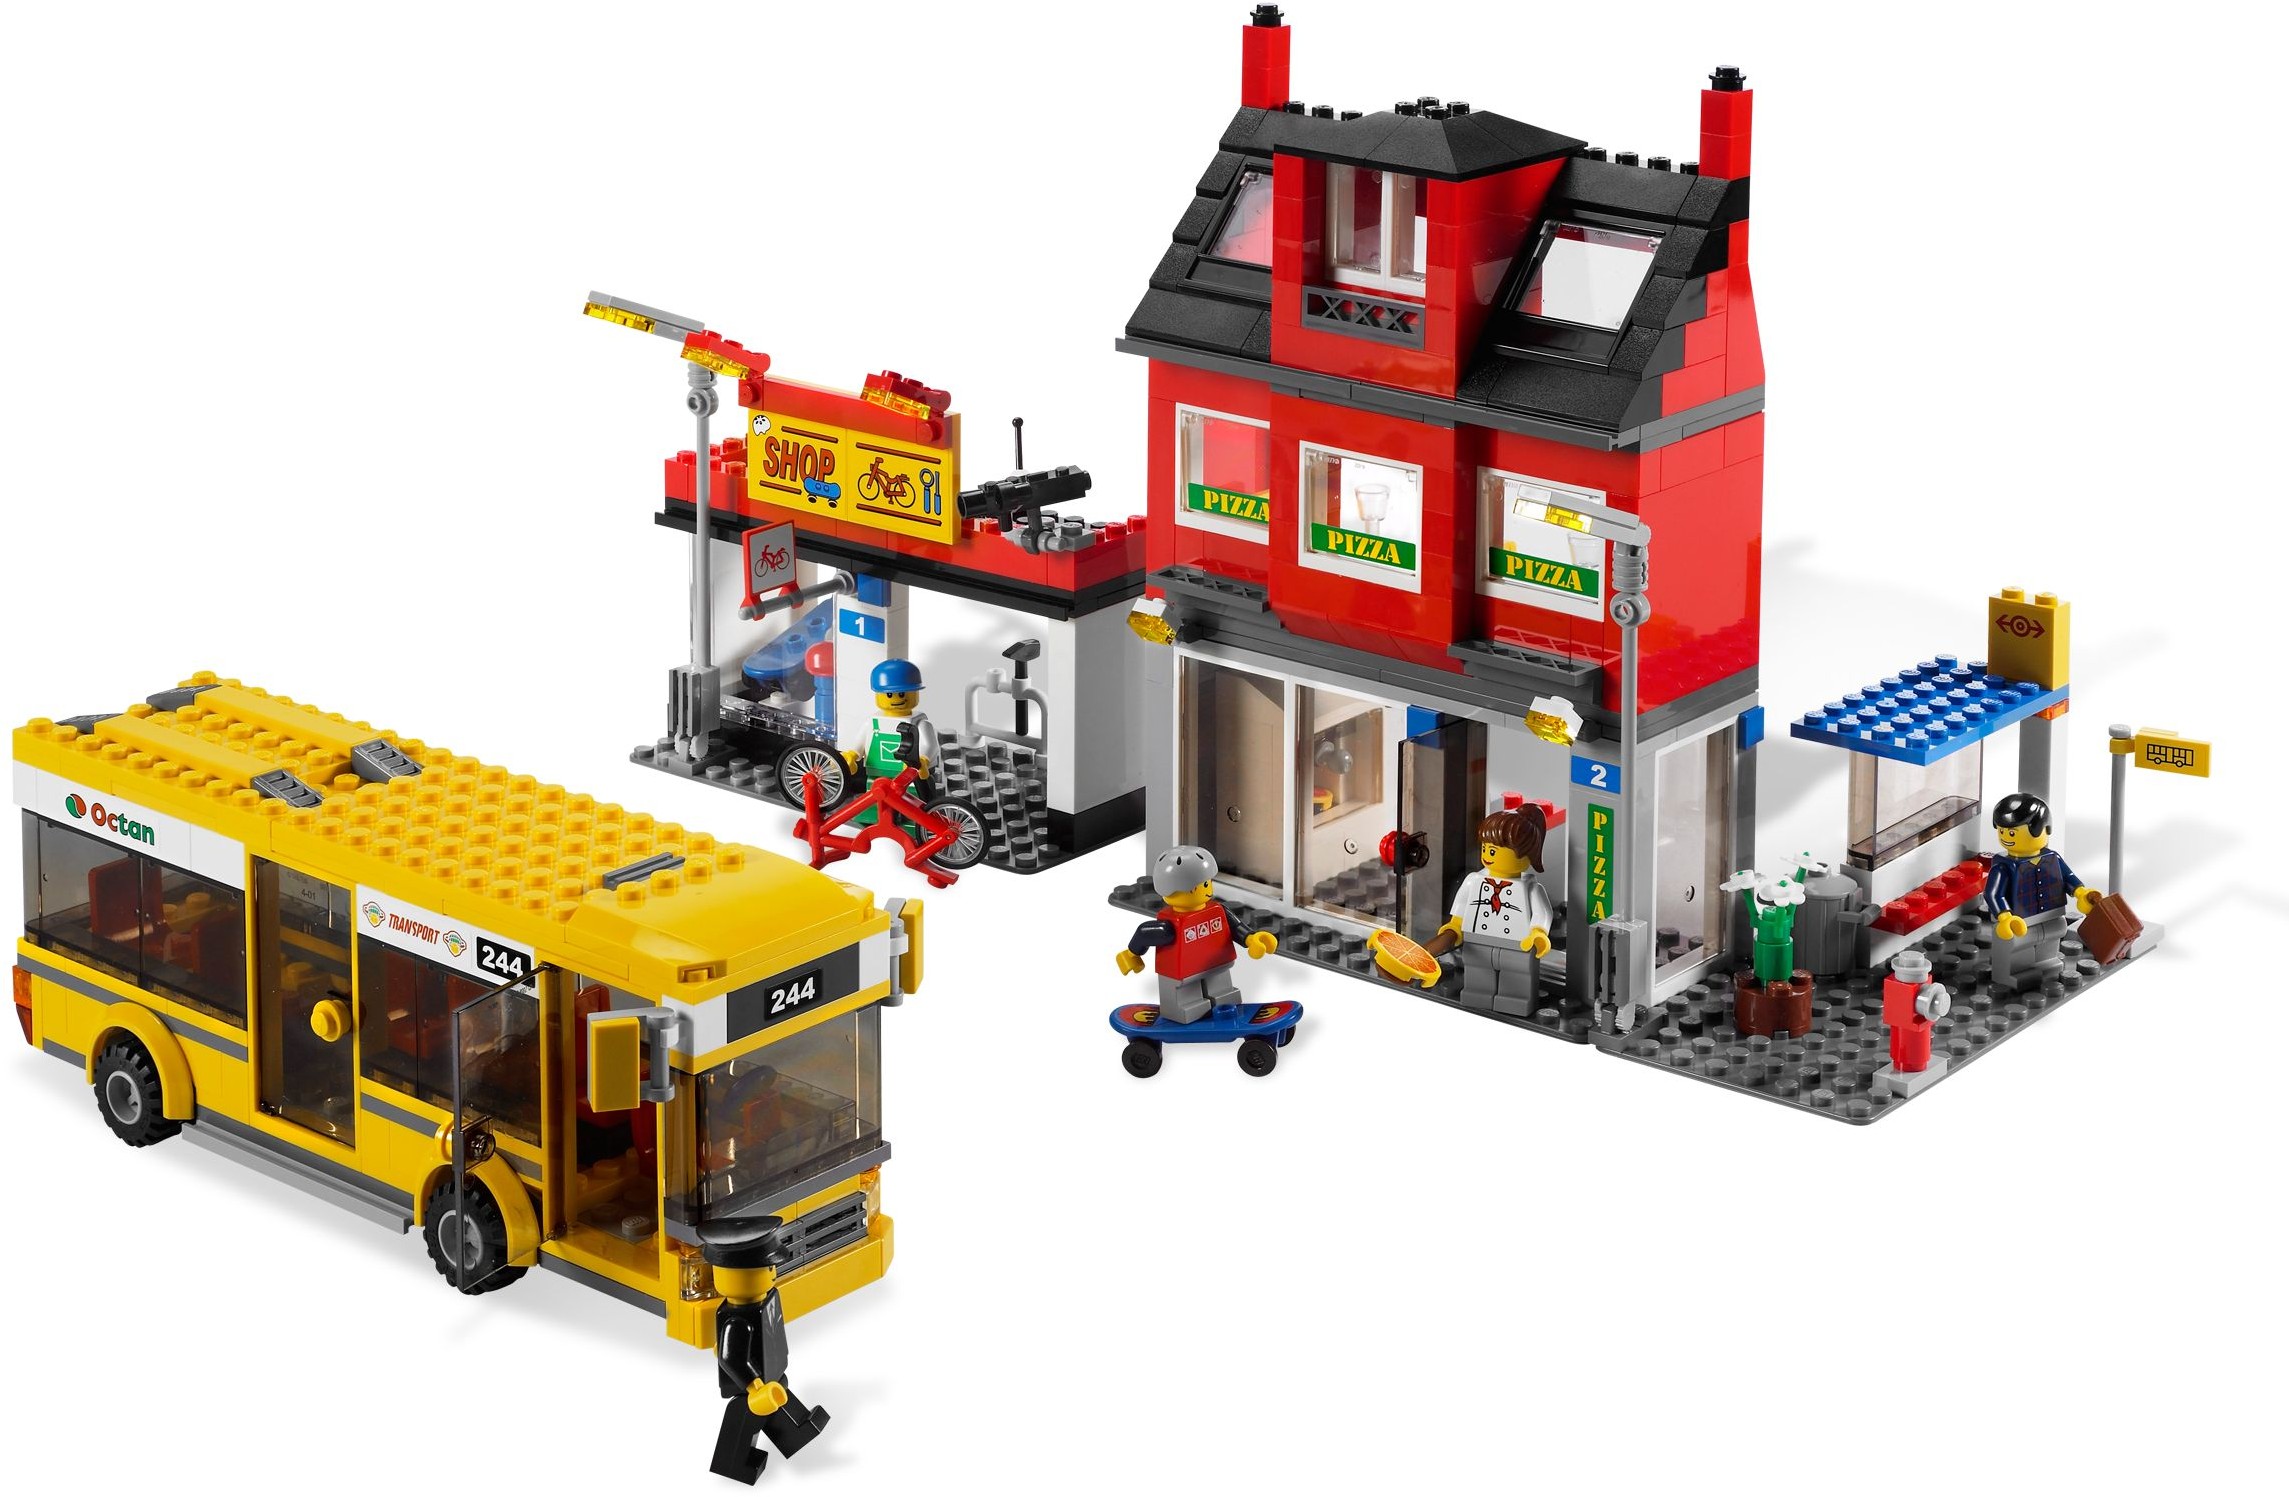 Anzai punkt dagsorden City | 2009 | Brickset: LEGO set guide and database